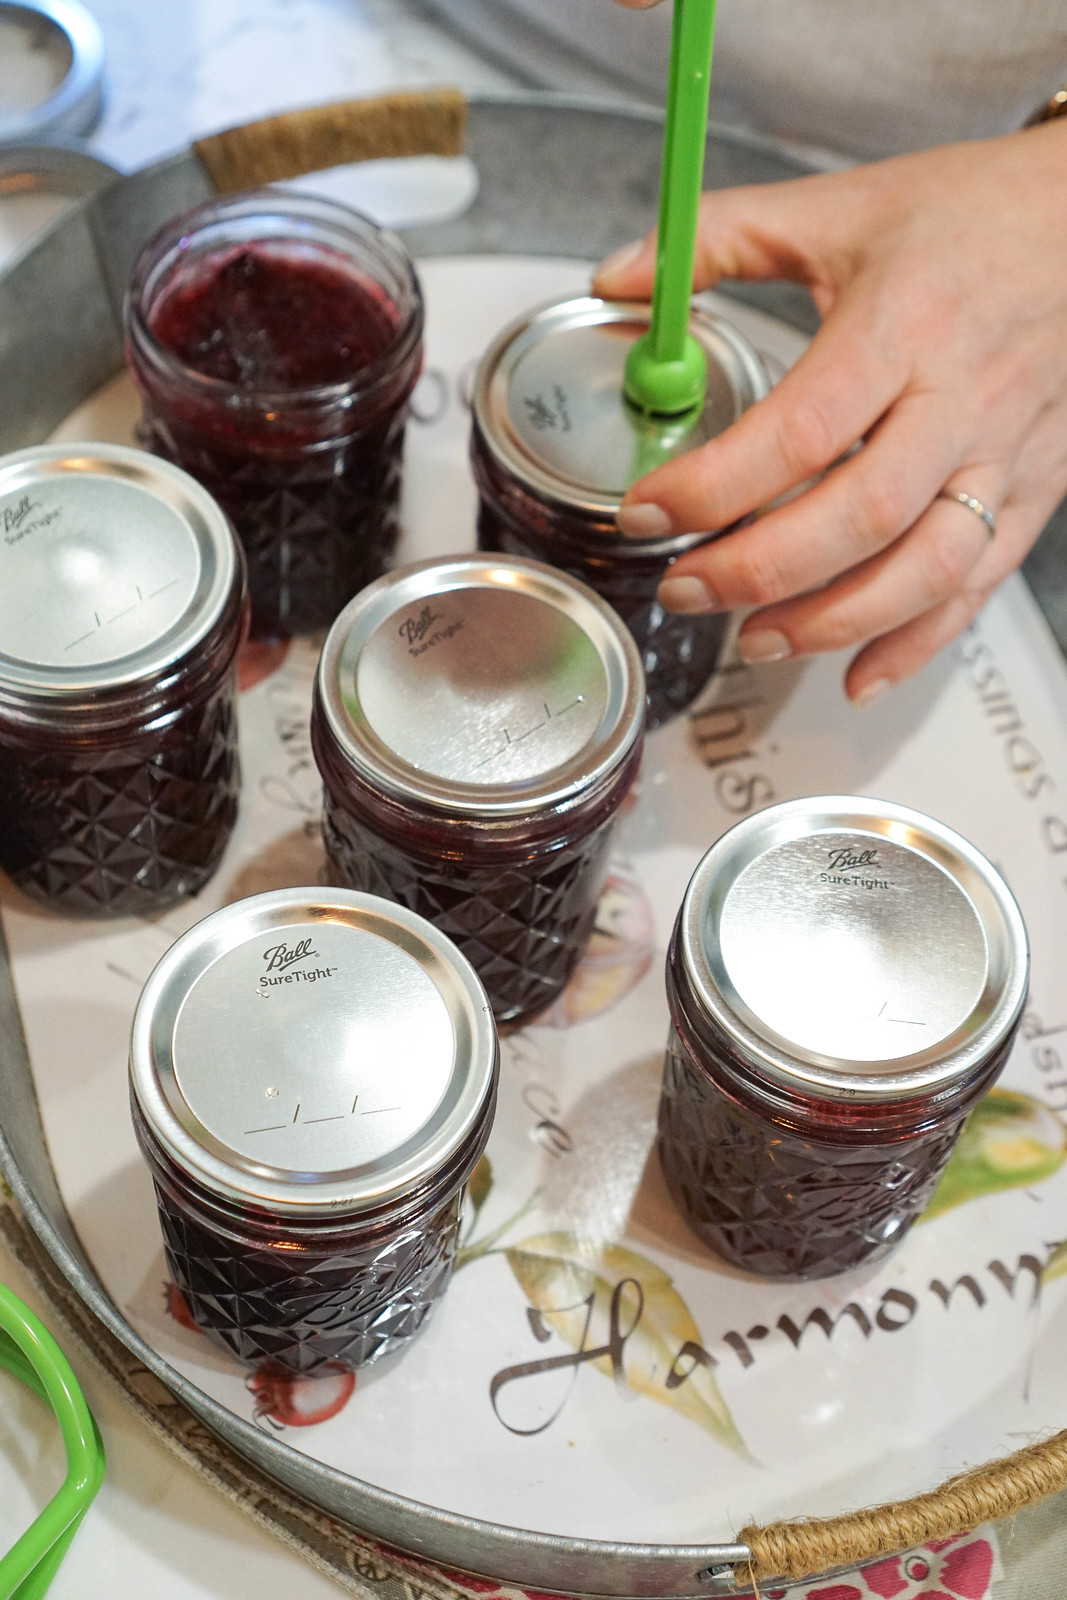 Mixed Berry Jam Recipe My New Favorite Summer Hobby: Canning with Ball Mason Jars